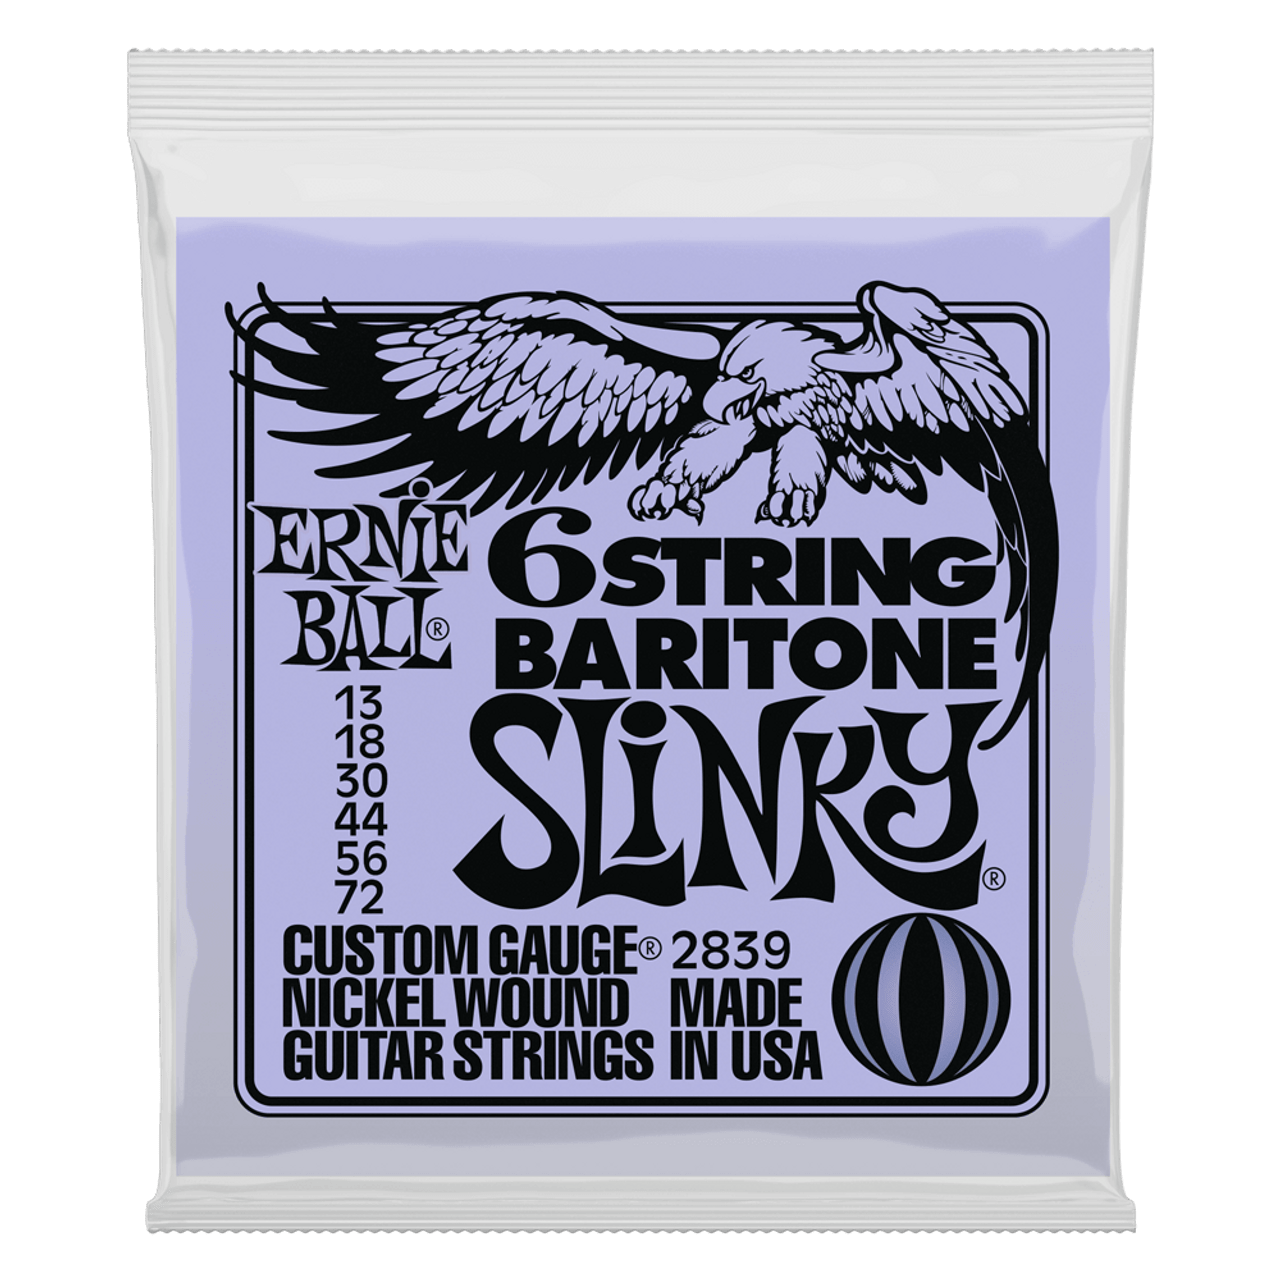 Ernie Ball 6 String Baritone Slinky Electric Guitar Strings